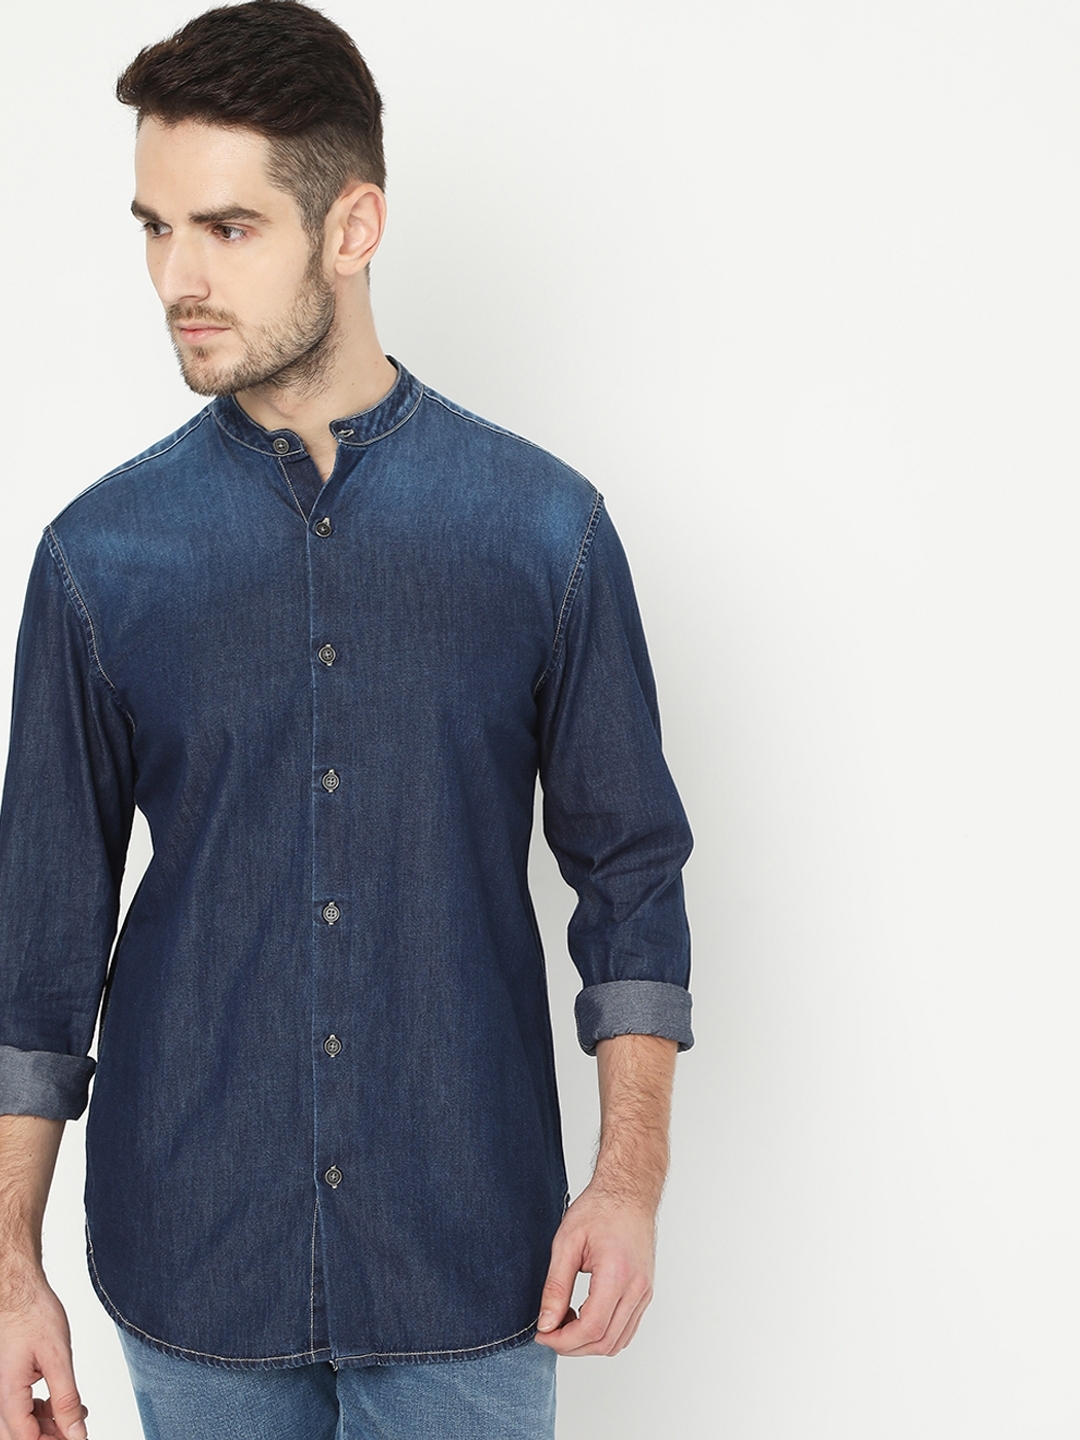 Men's Denim Shirts Long Sleeve Suede Color Block Button Lapel Wash Tops  Fashion Casual Slim Fit Western Basic Oxford Shirt - Walmart.com